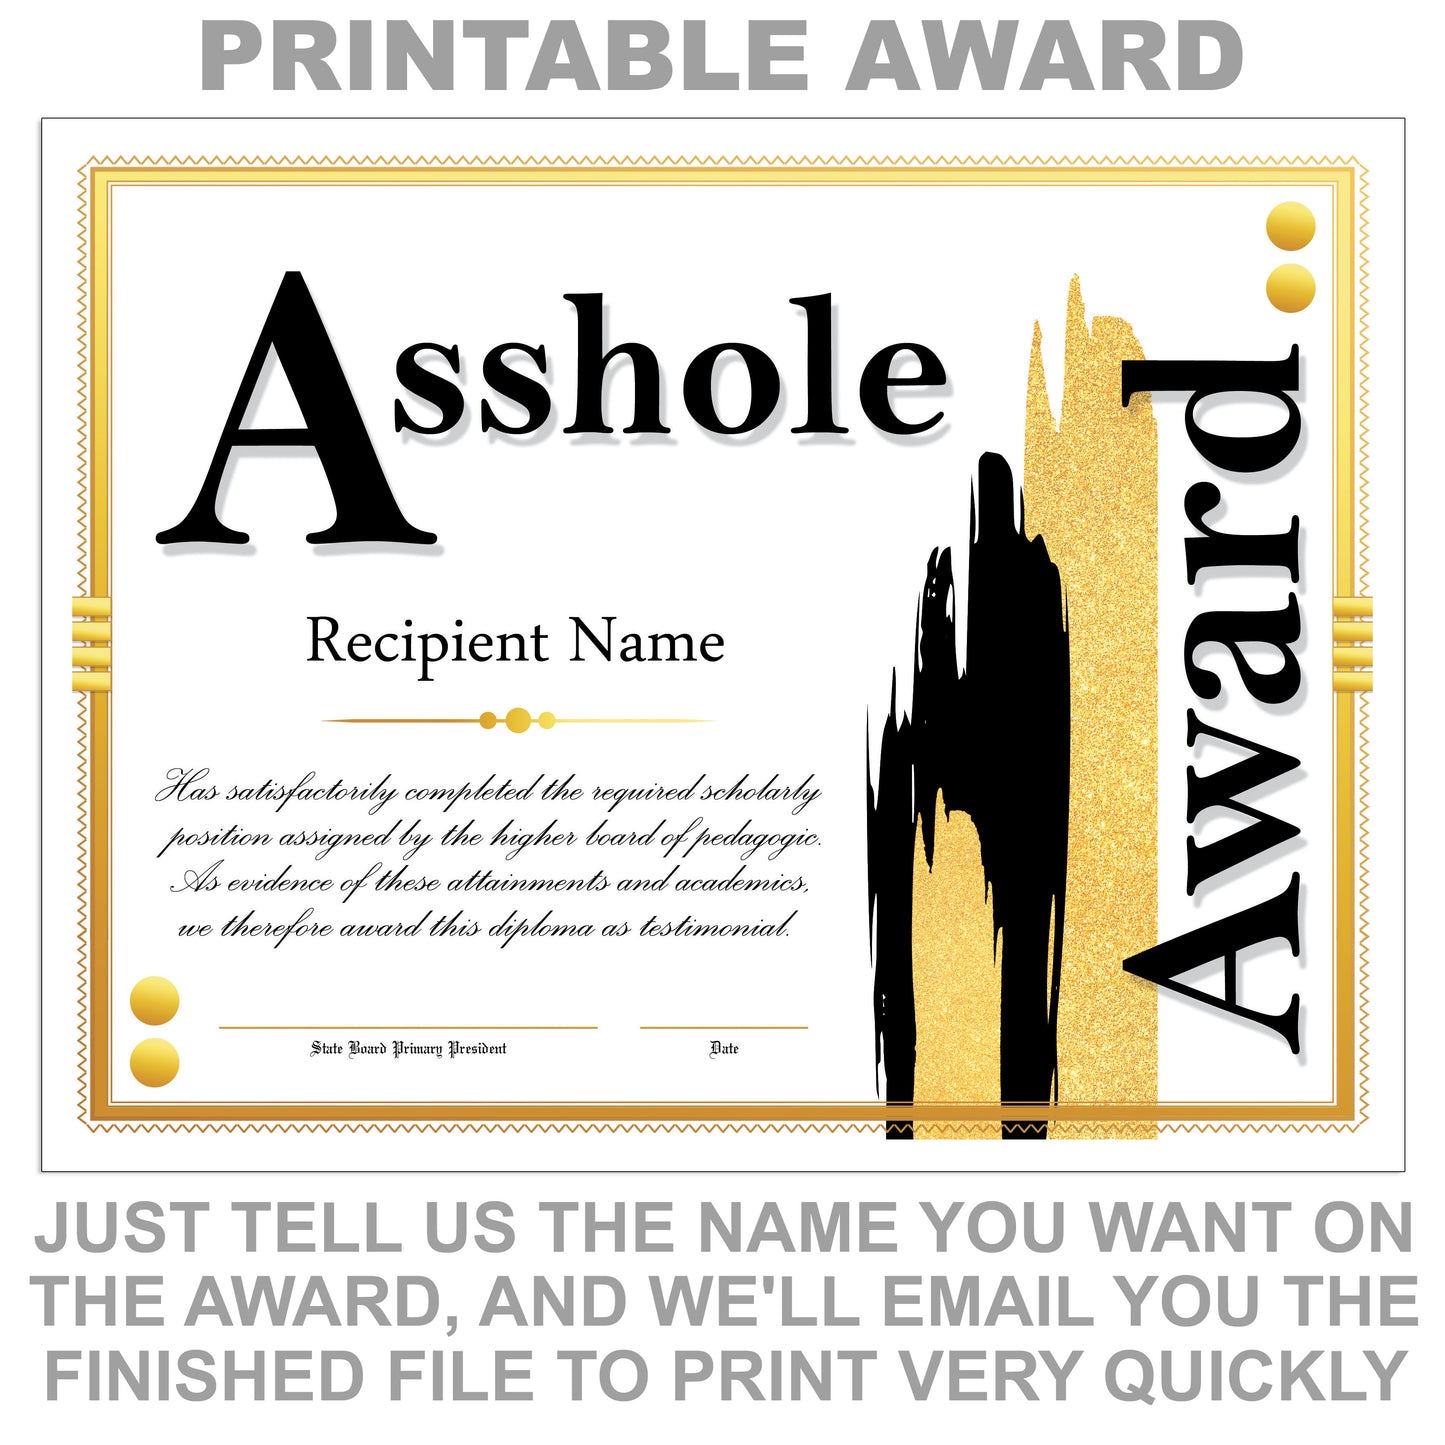 Asshole Award Printable Certificate